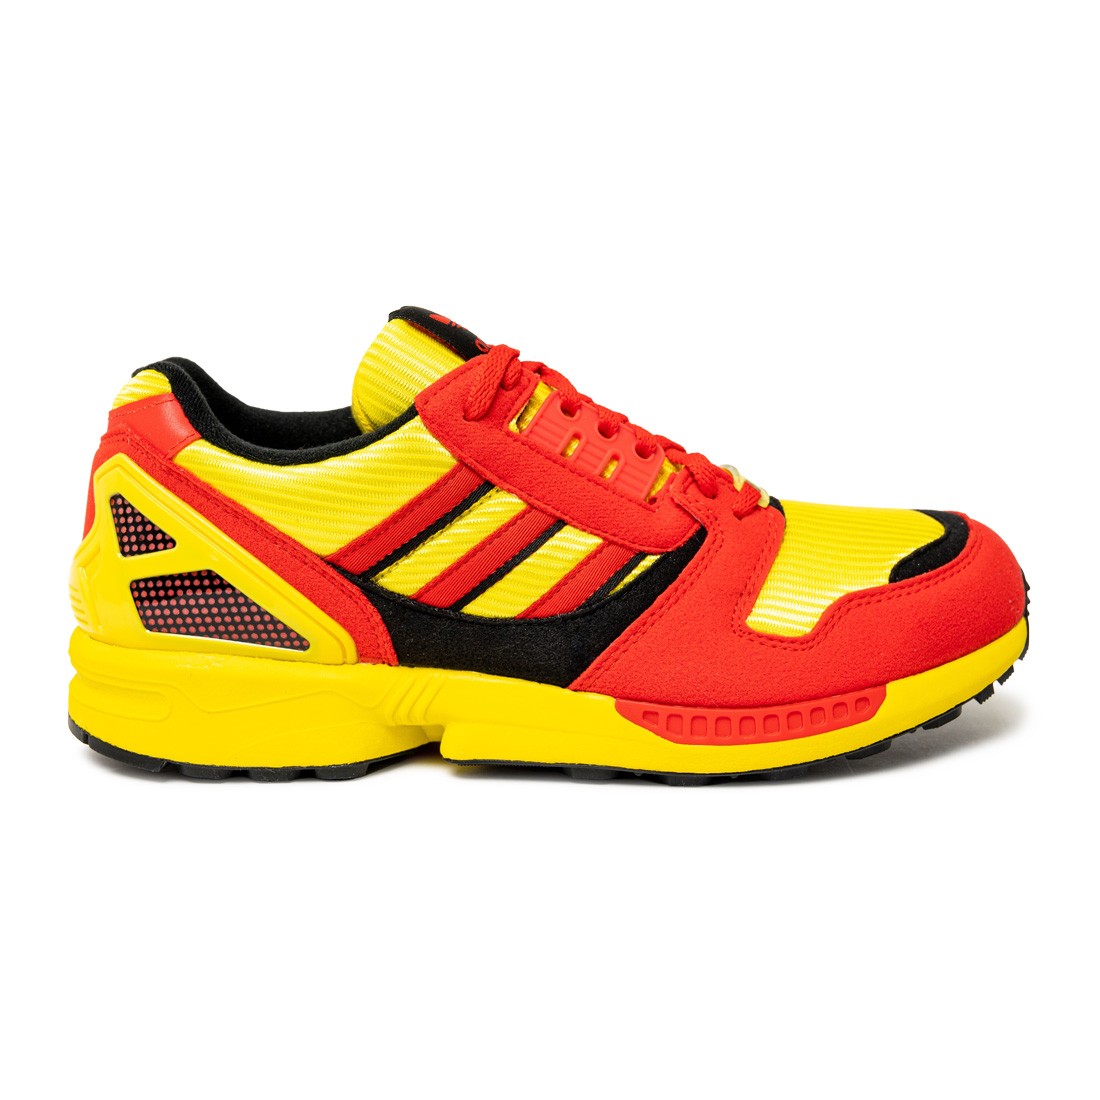 Adidas Men ZX 8000 (yellow / bright yellow / core black / red)